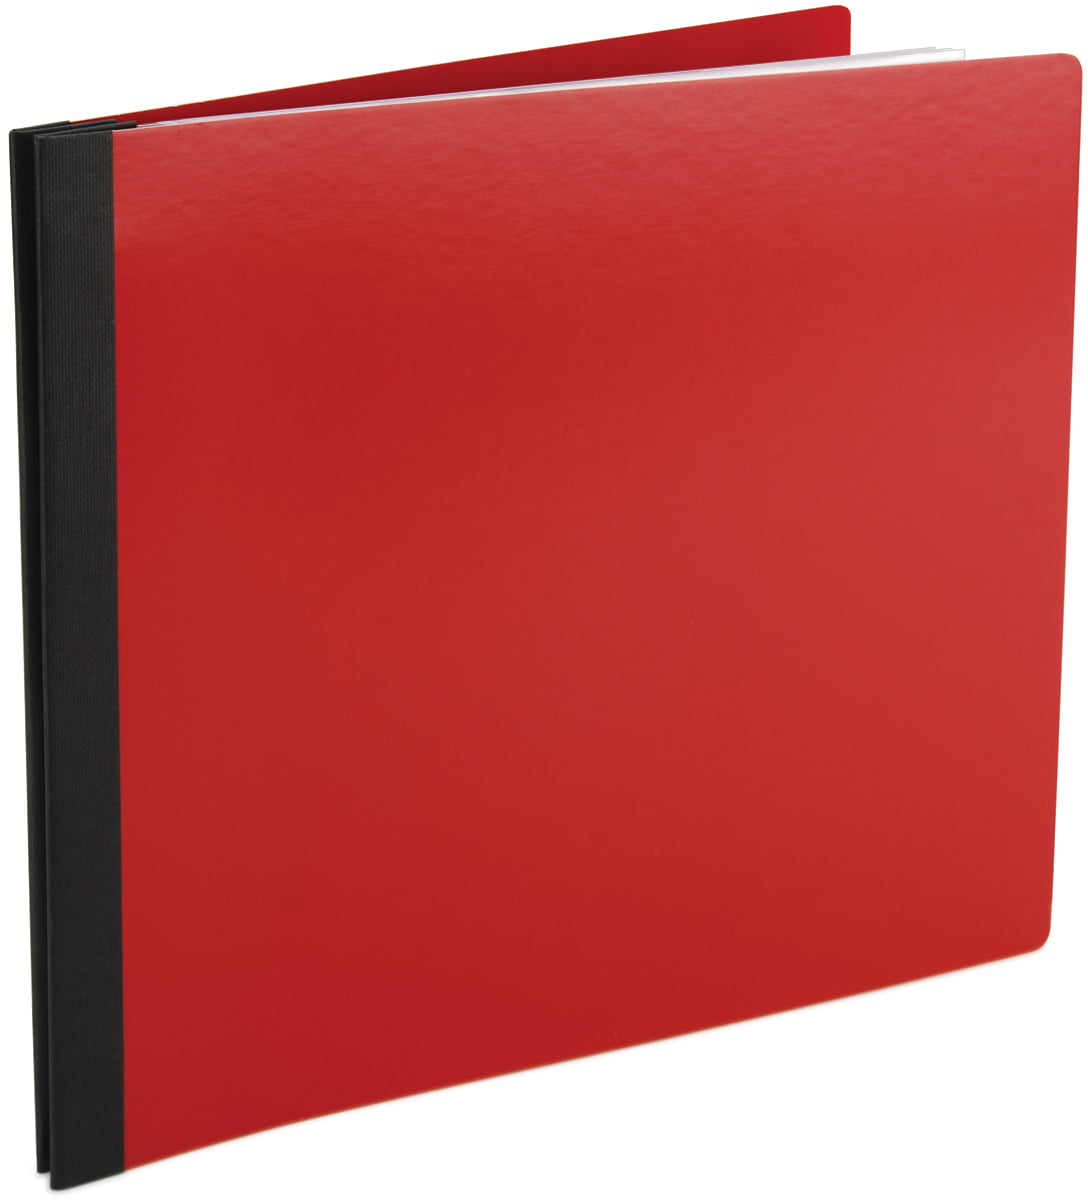 SEI Crafts Red 8x8 Preservation Album Photos Scrapbook 10 pages NEW!